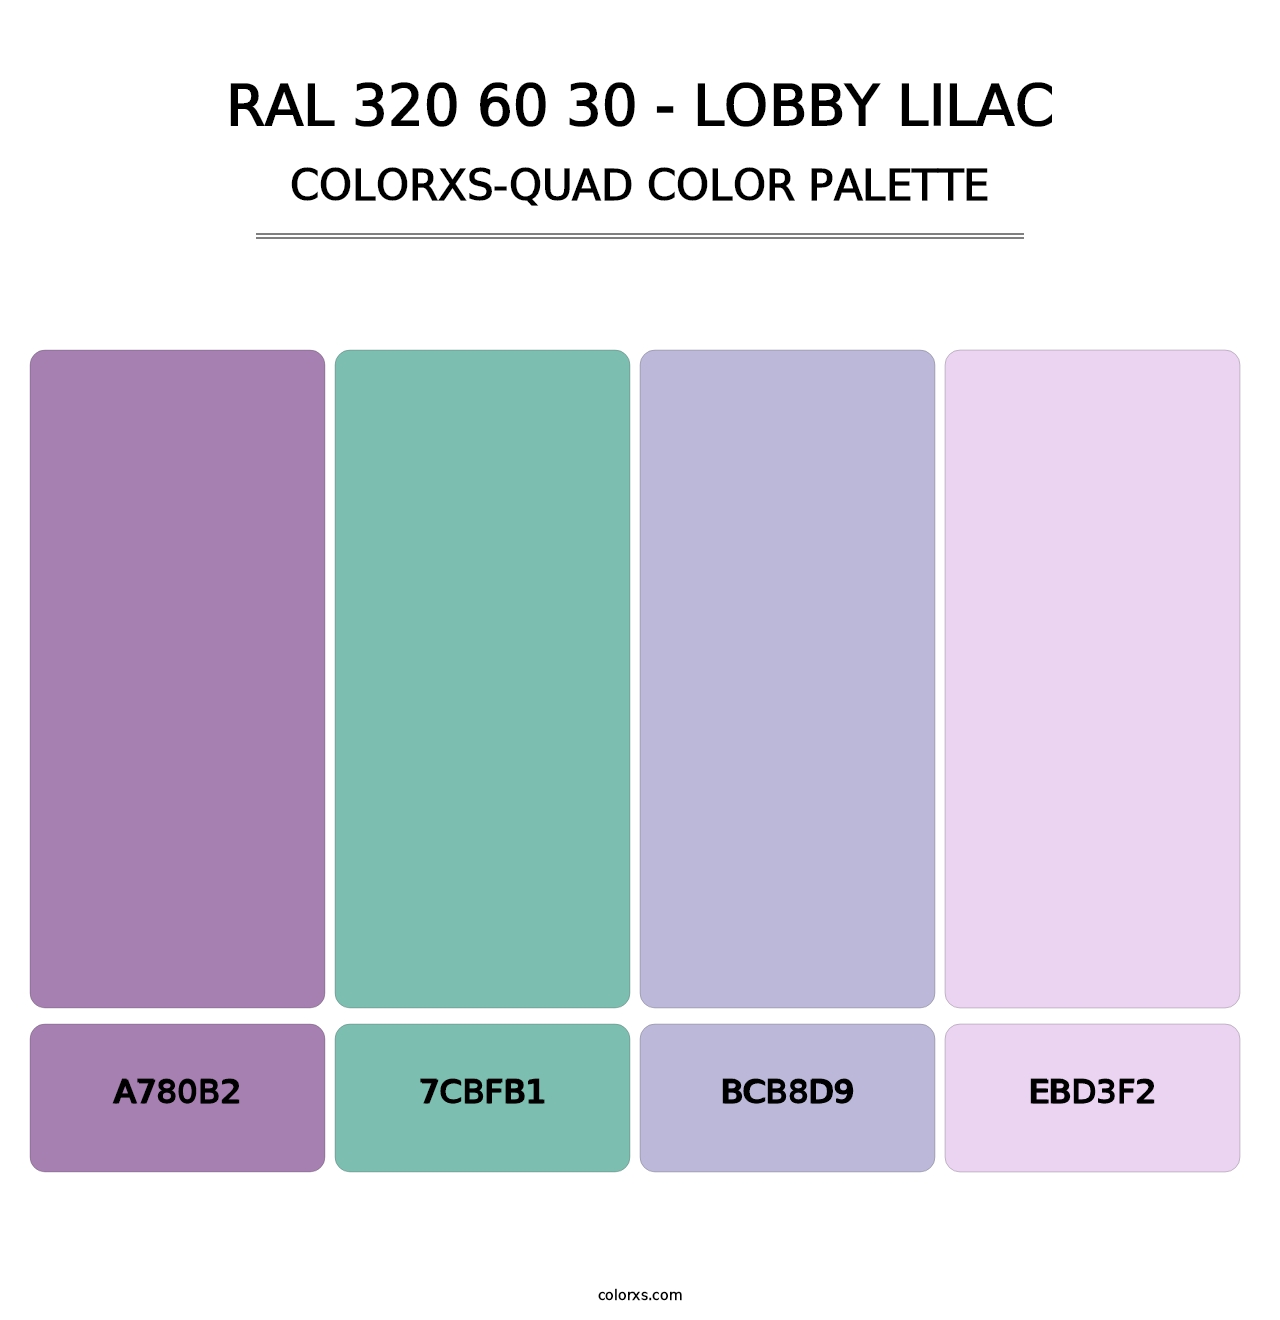 RAL 320 60 30 - Lobby Lilac - Colorxs Quad Palette